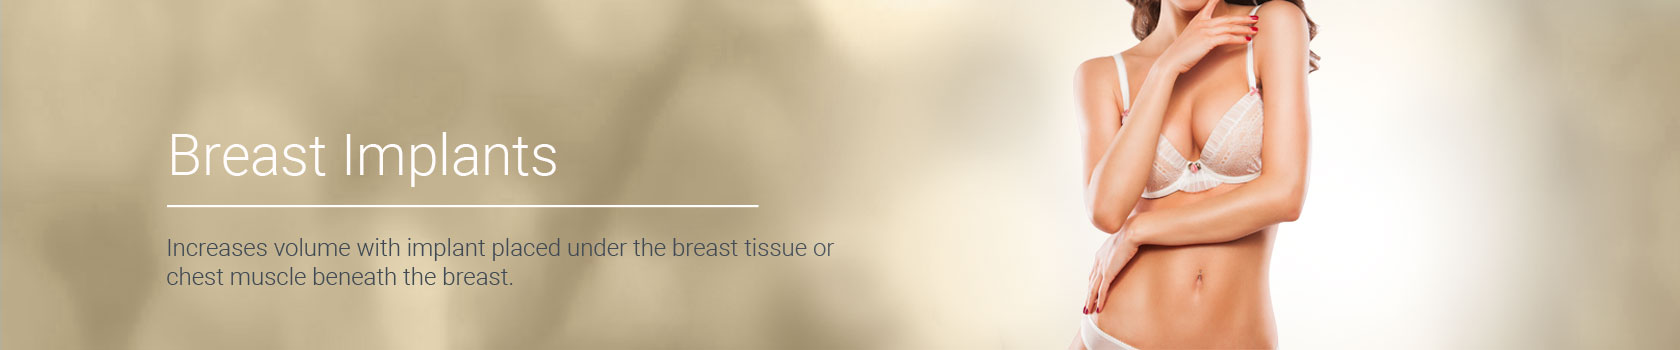 Breastimplants